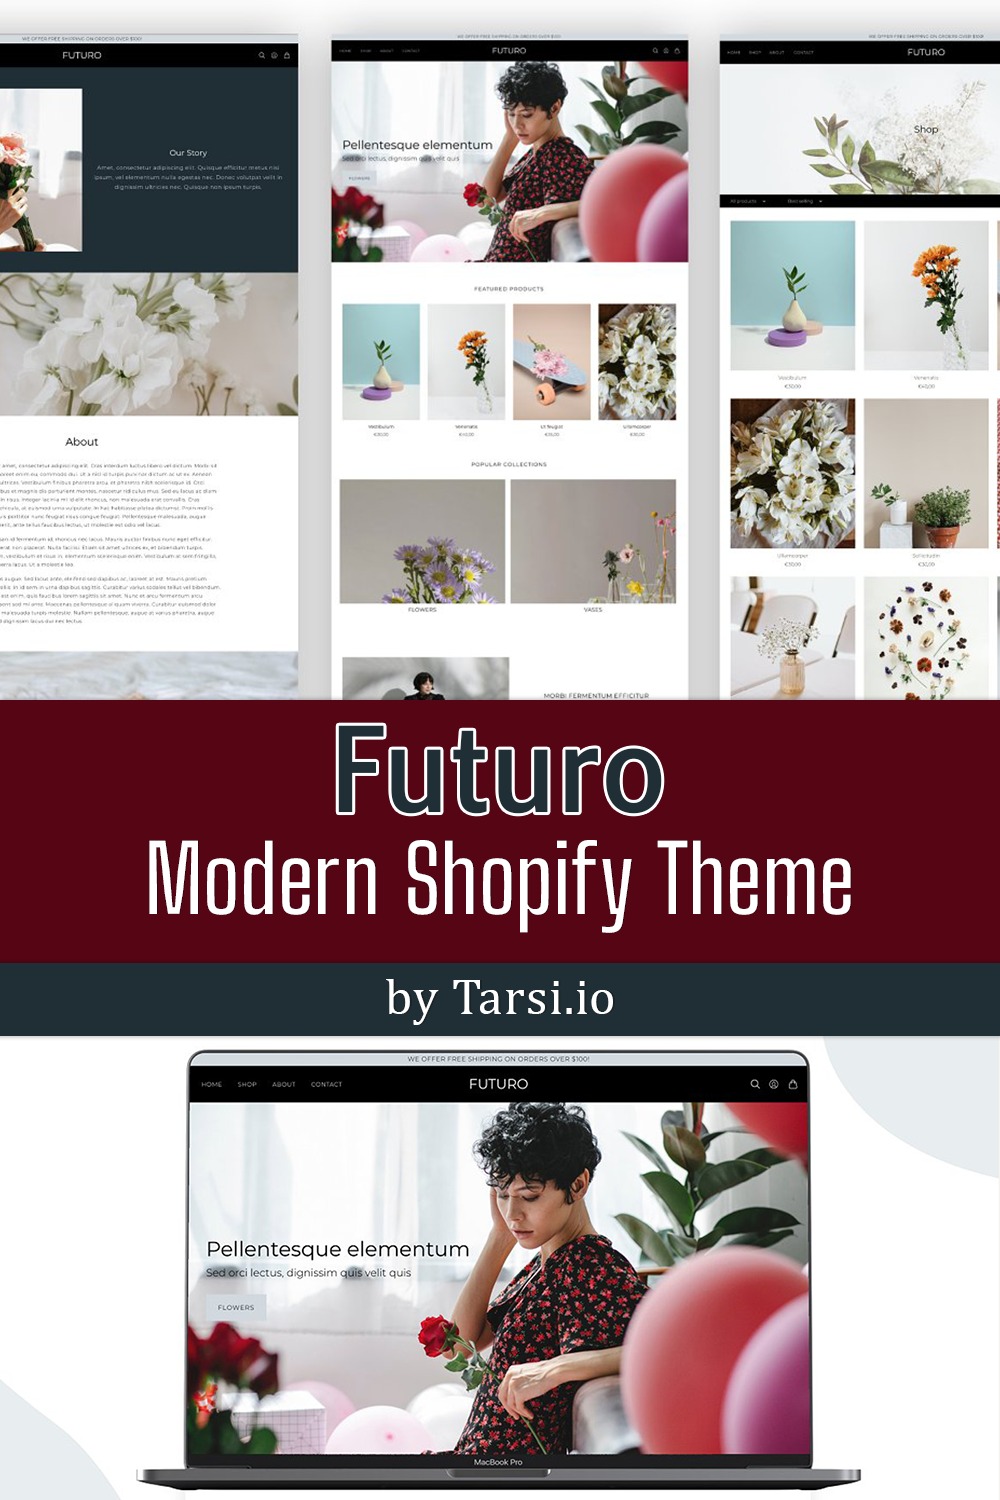 Futuro modern shopify theme images of pinterest.